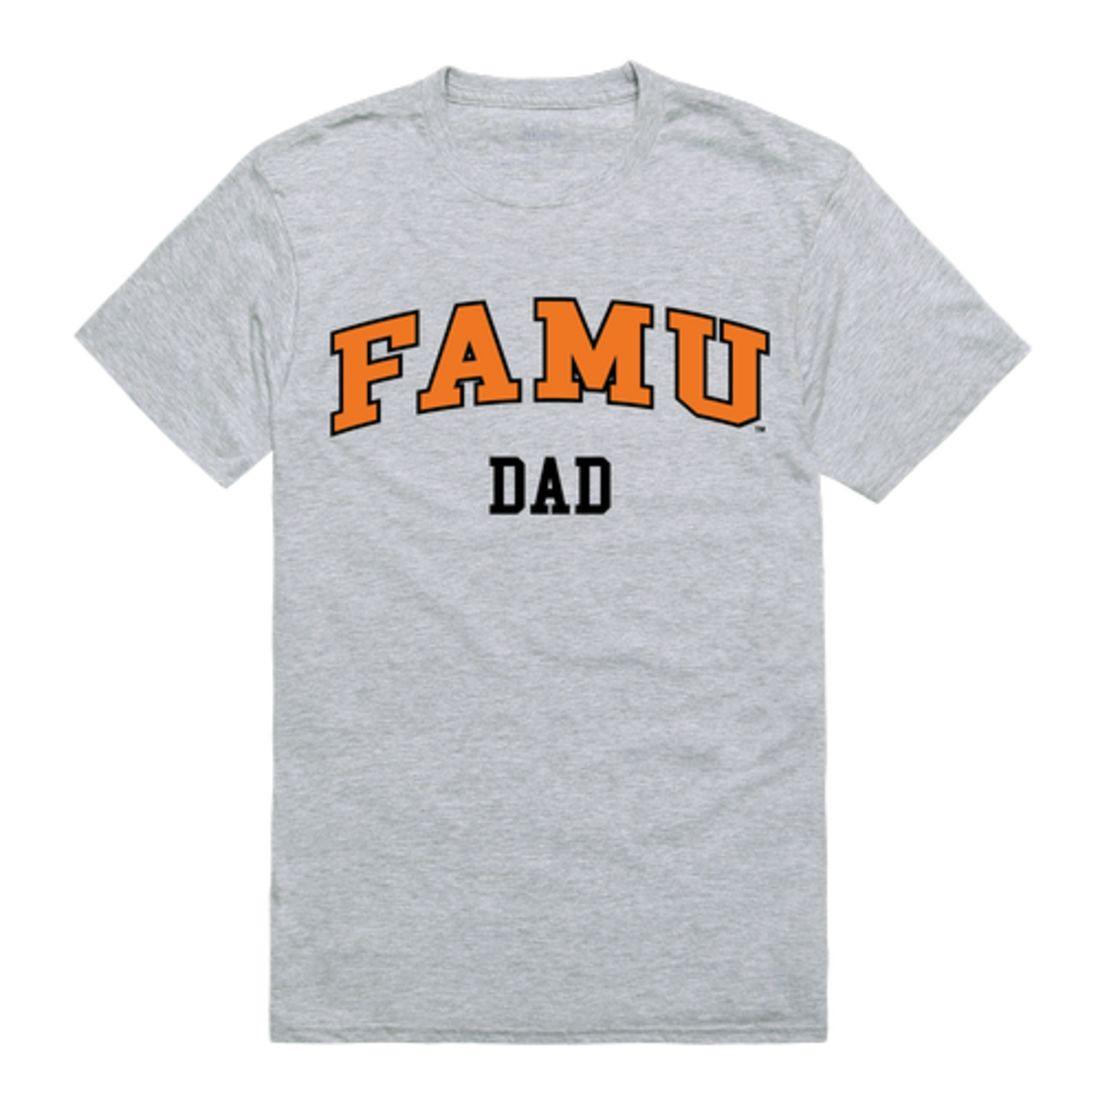 FAMU Florida A&M University Rattlers College Dad T-Shirt-Campus-Wardrobe